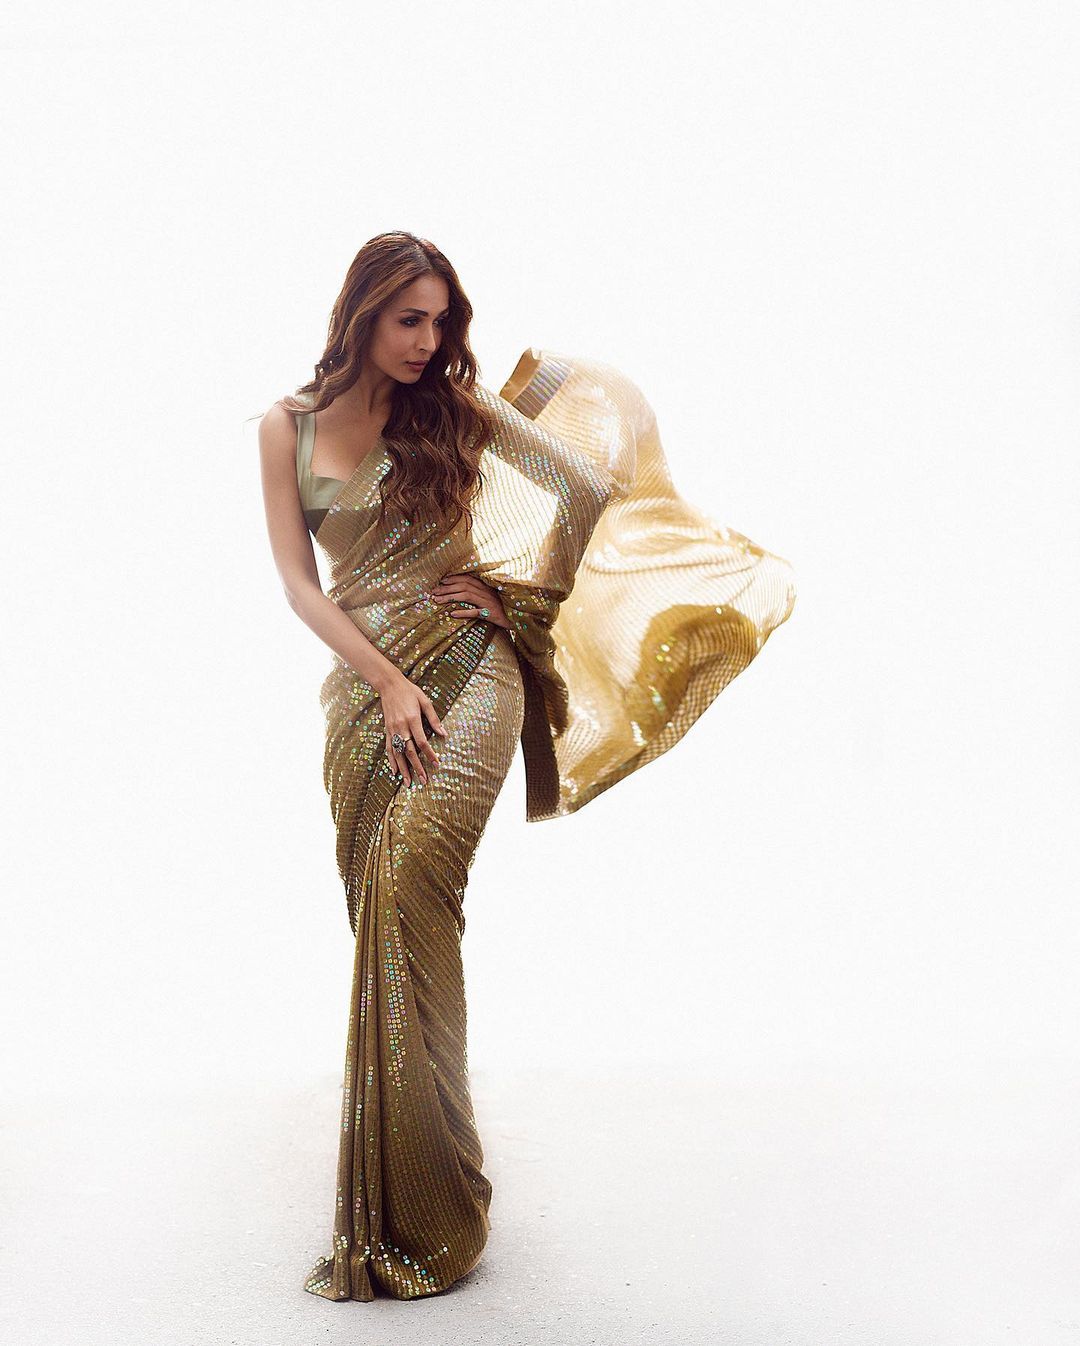  Malaika Arora looks hot in a shimmery golden saree. (Image: Instagram)